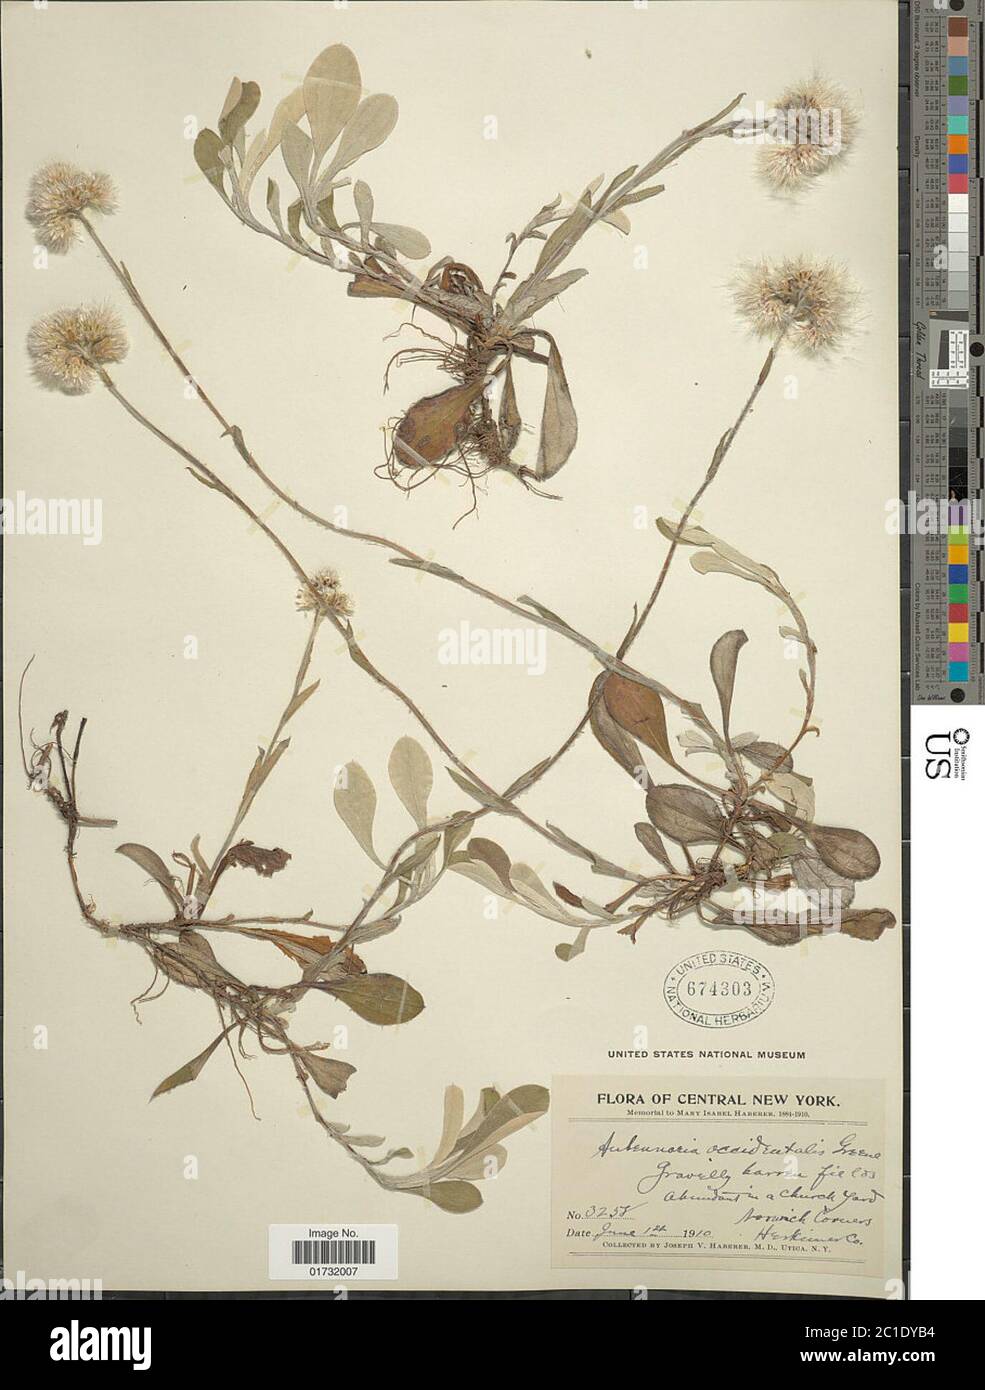 Antennaria occidentalis Greene Antennaria occidentalis Greene. Stock Photo